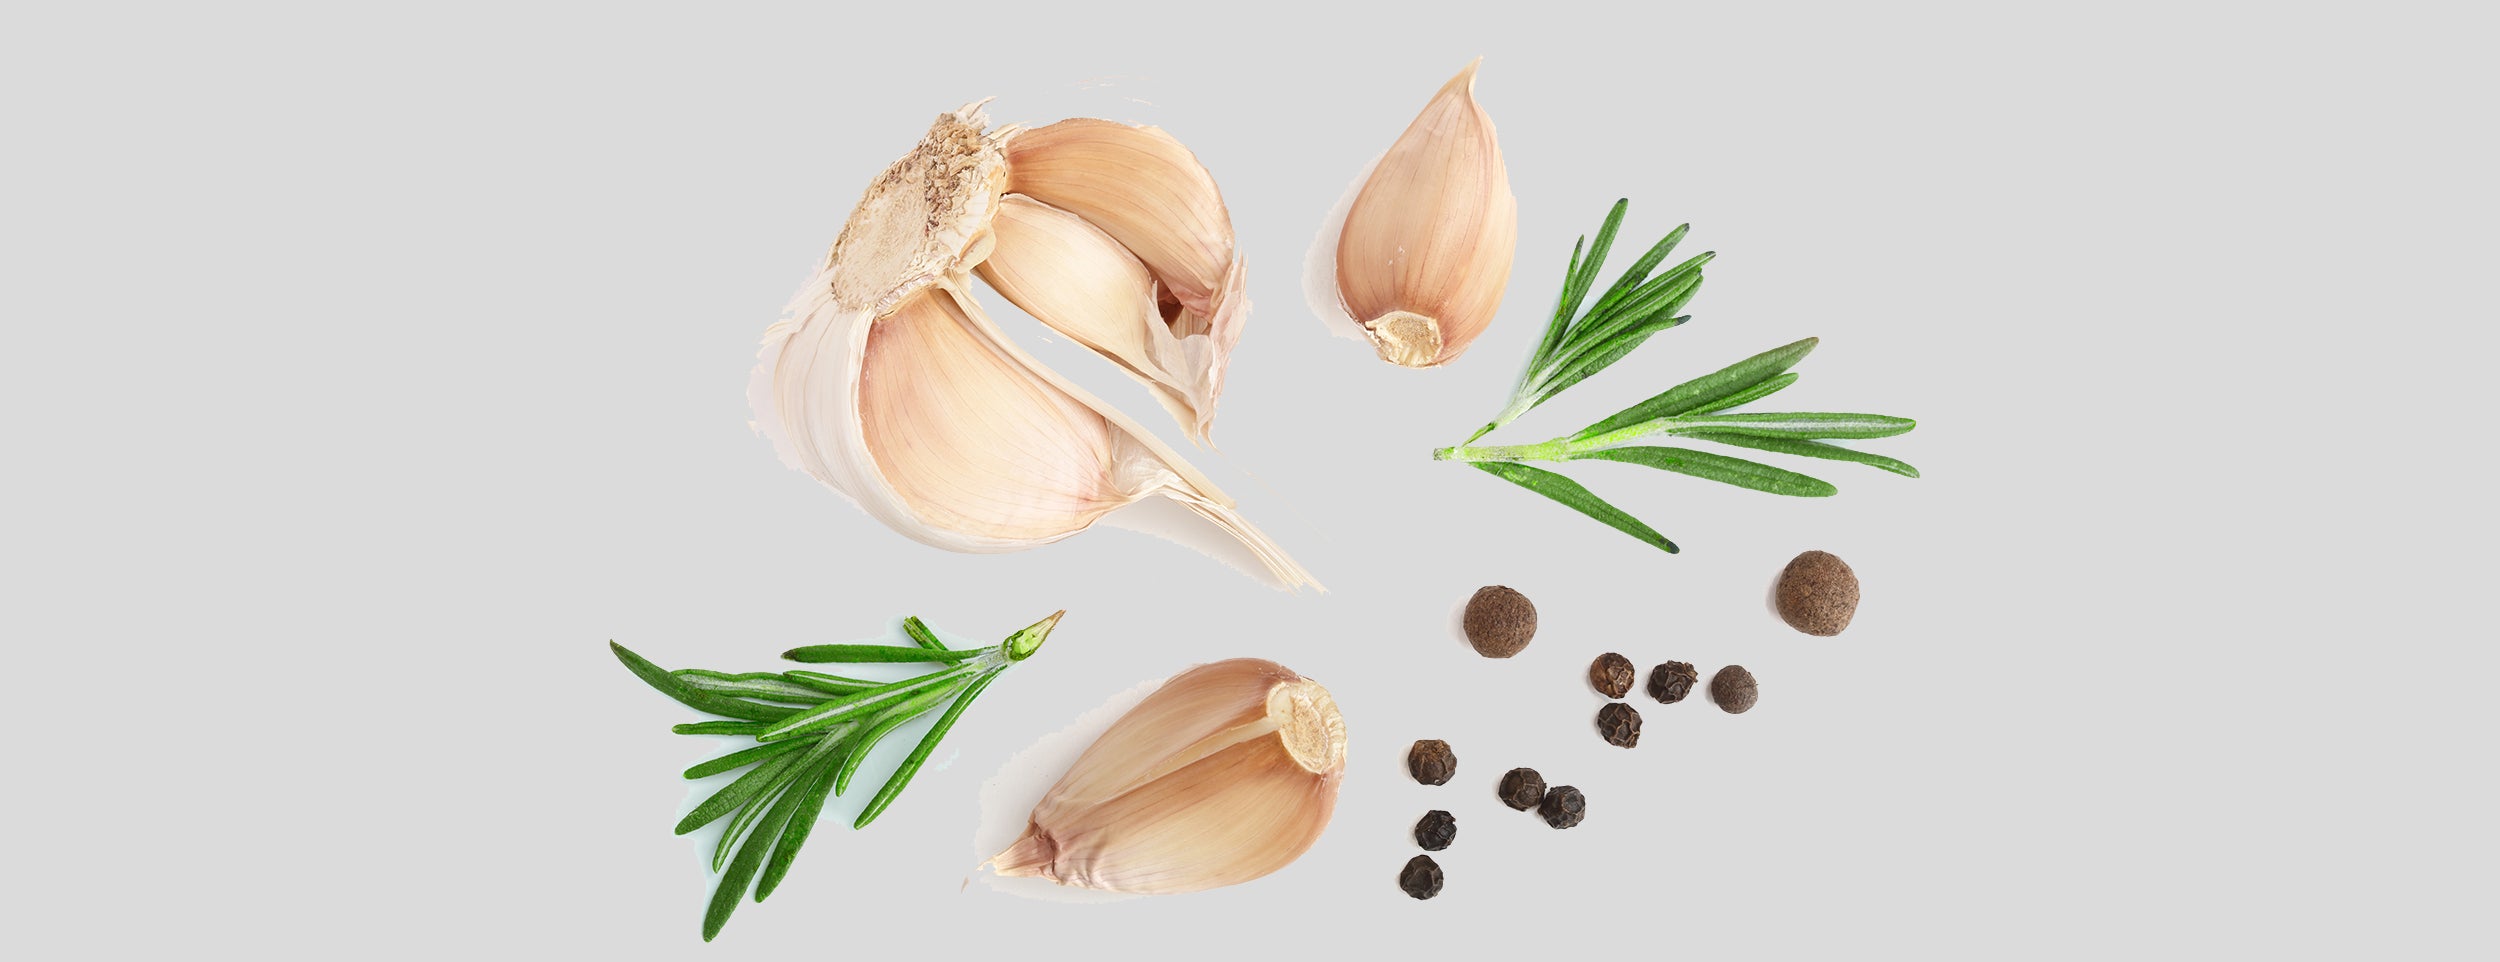 Garlic Stops Wounds From Healing: 5 Ingredients & Mechanism